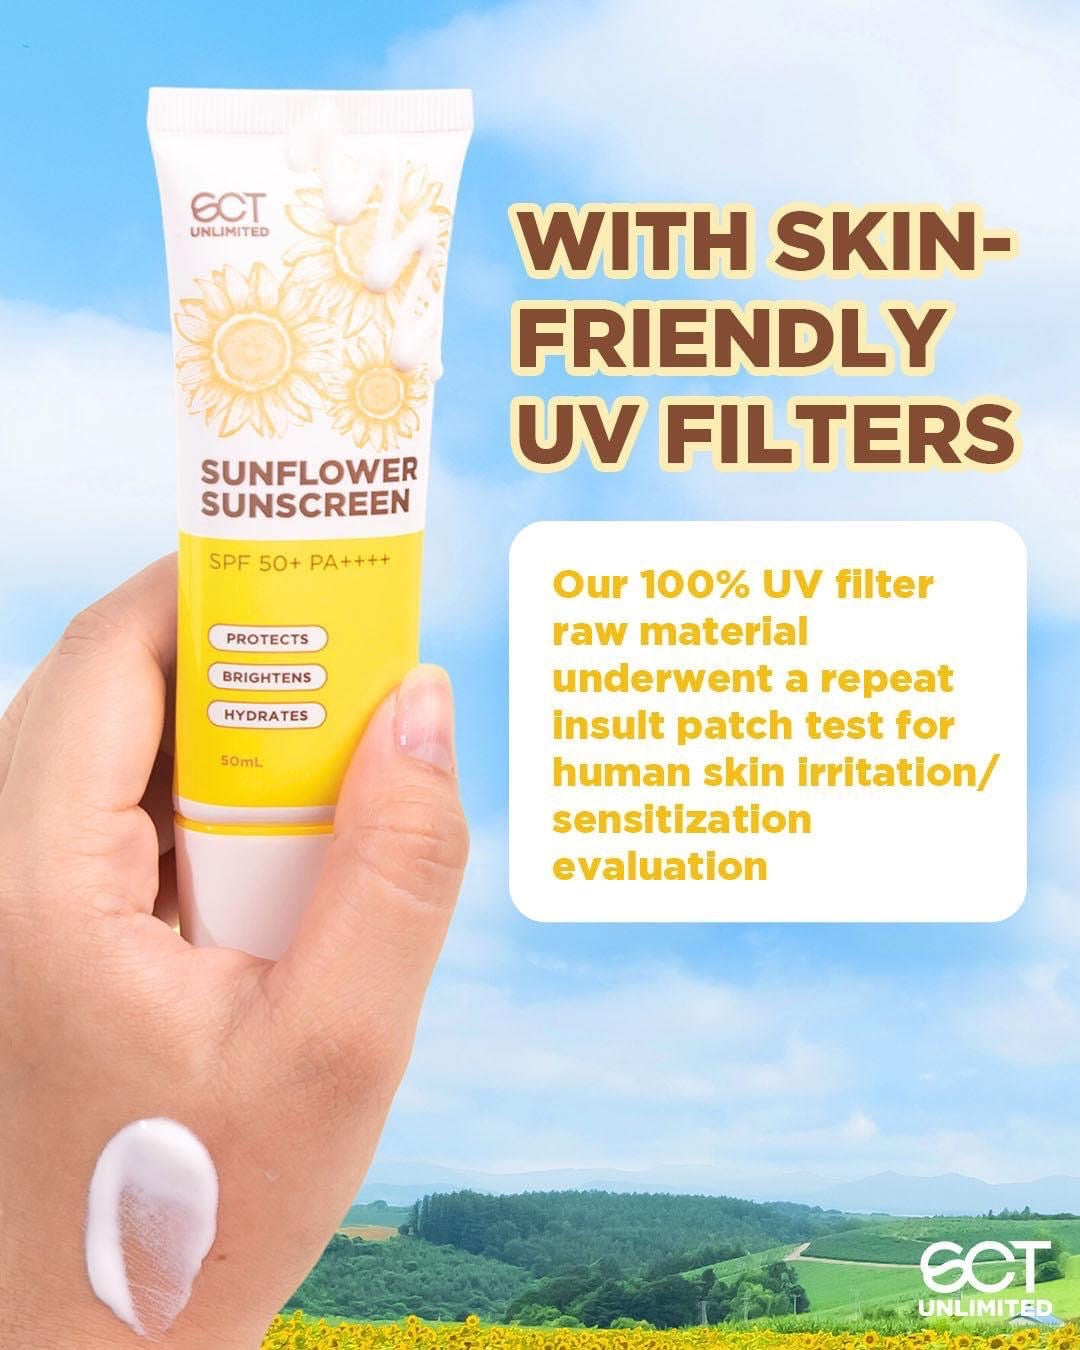 SCT Unlimited Sunflower Sunscreen SPF 50+ PA+++